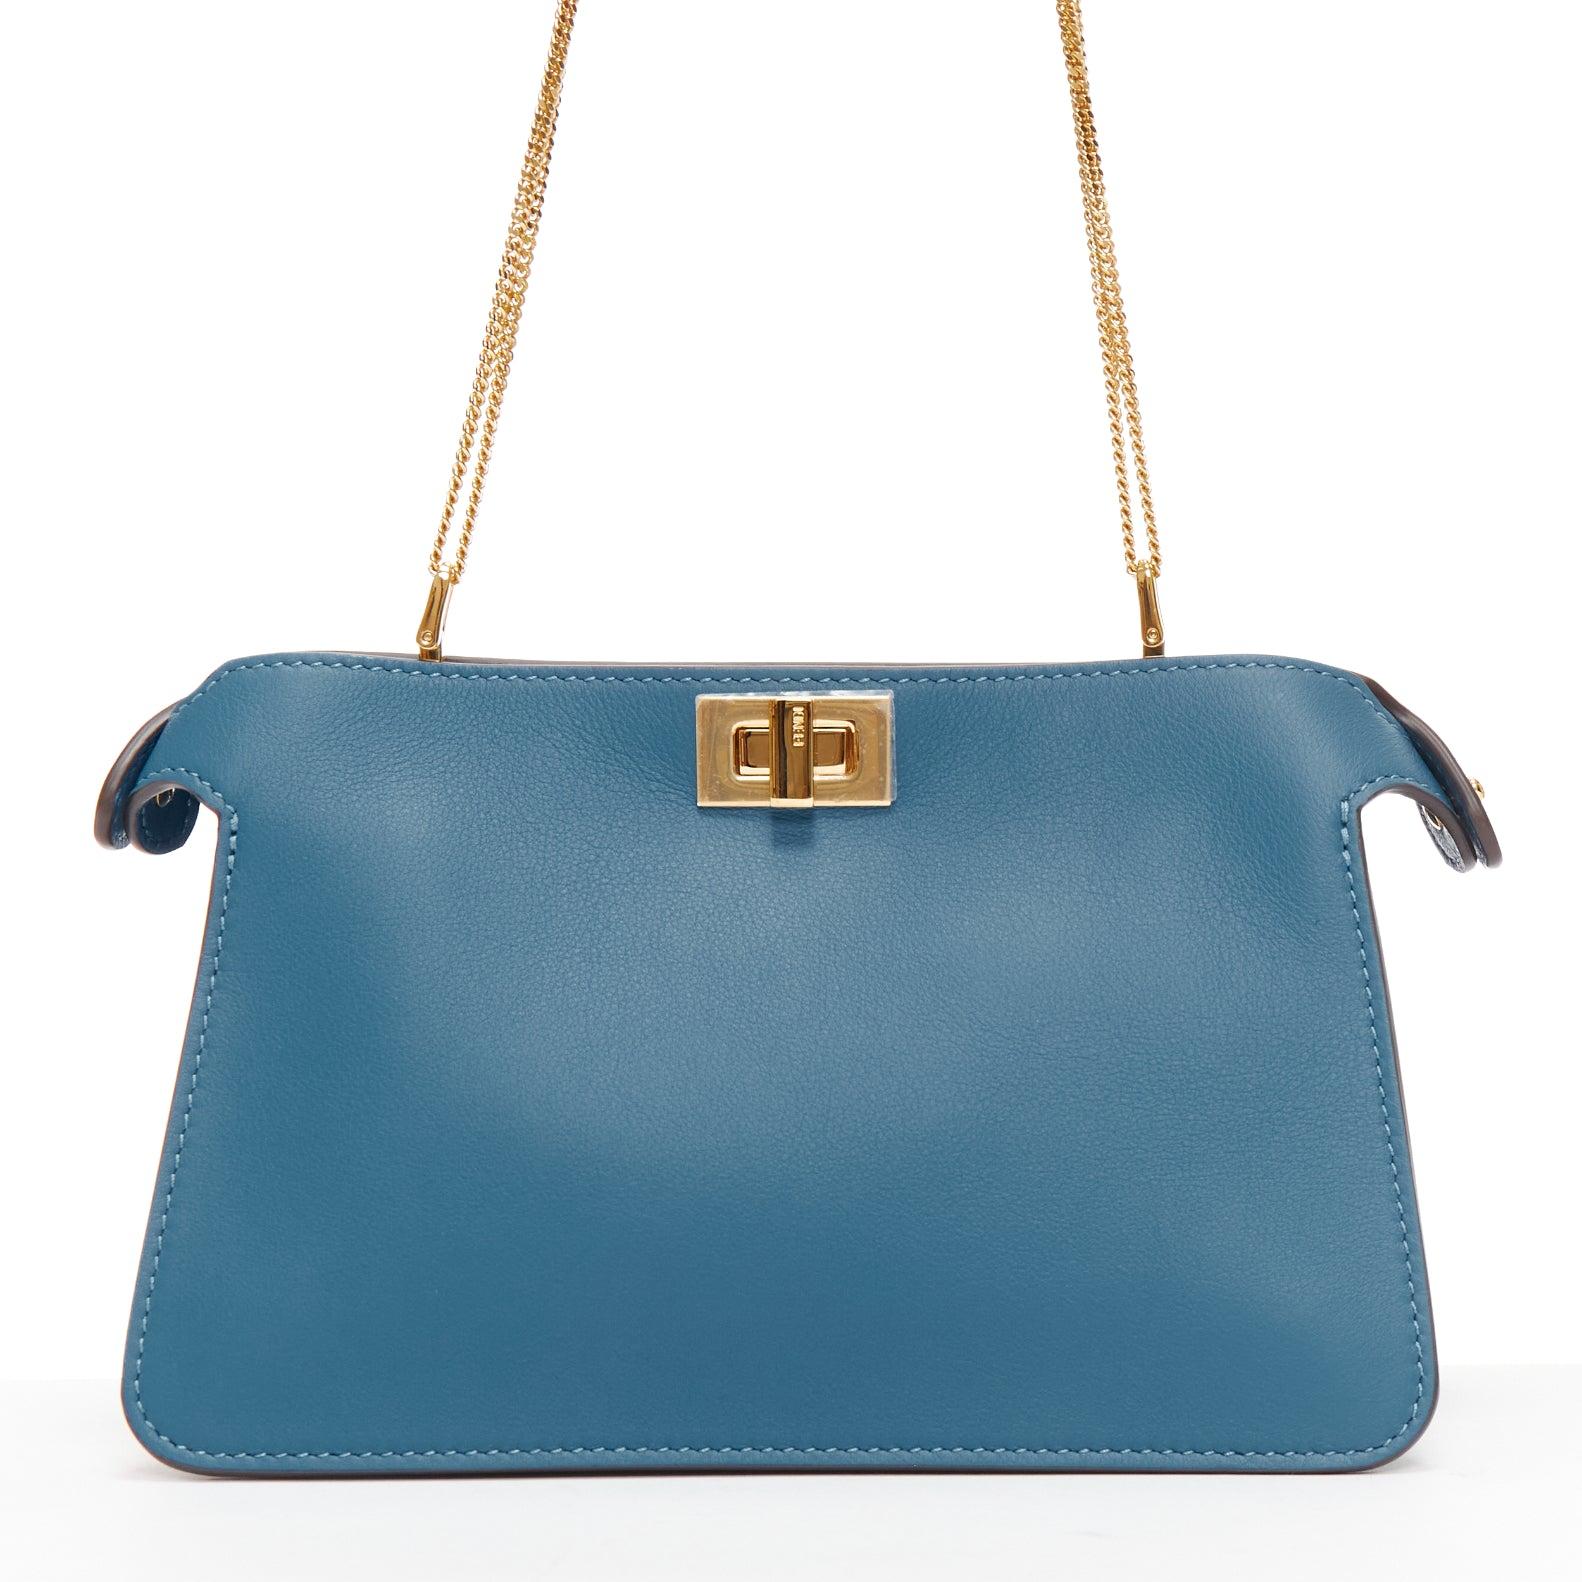 FENDI Peekaboo pink lace applique blue leather gold buckle crossbody bag For Sale 1